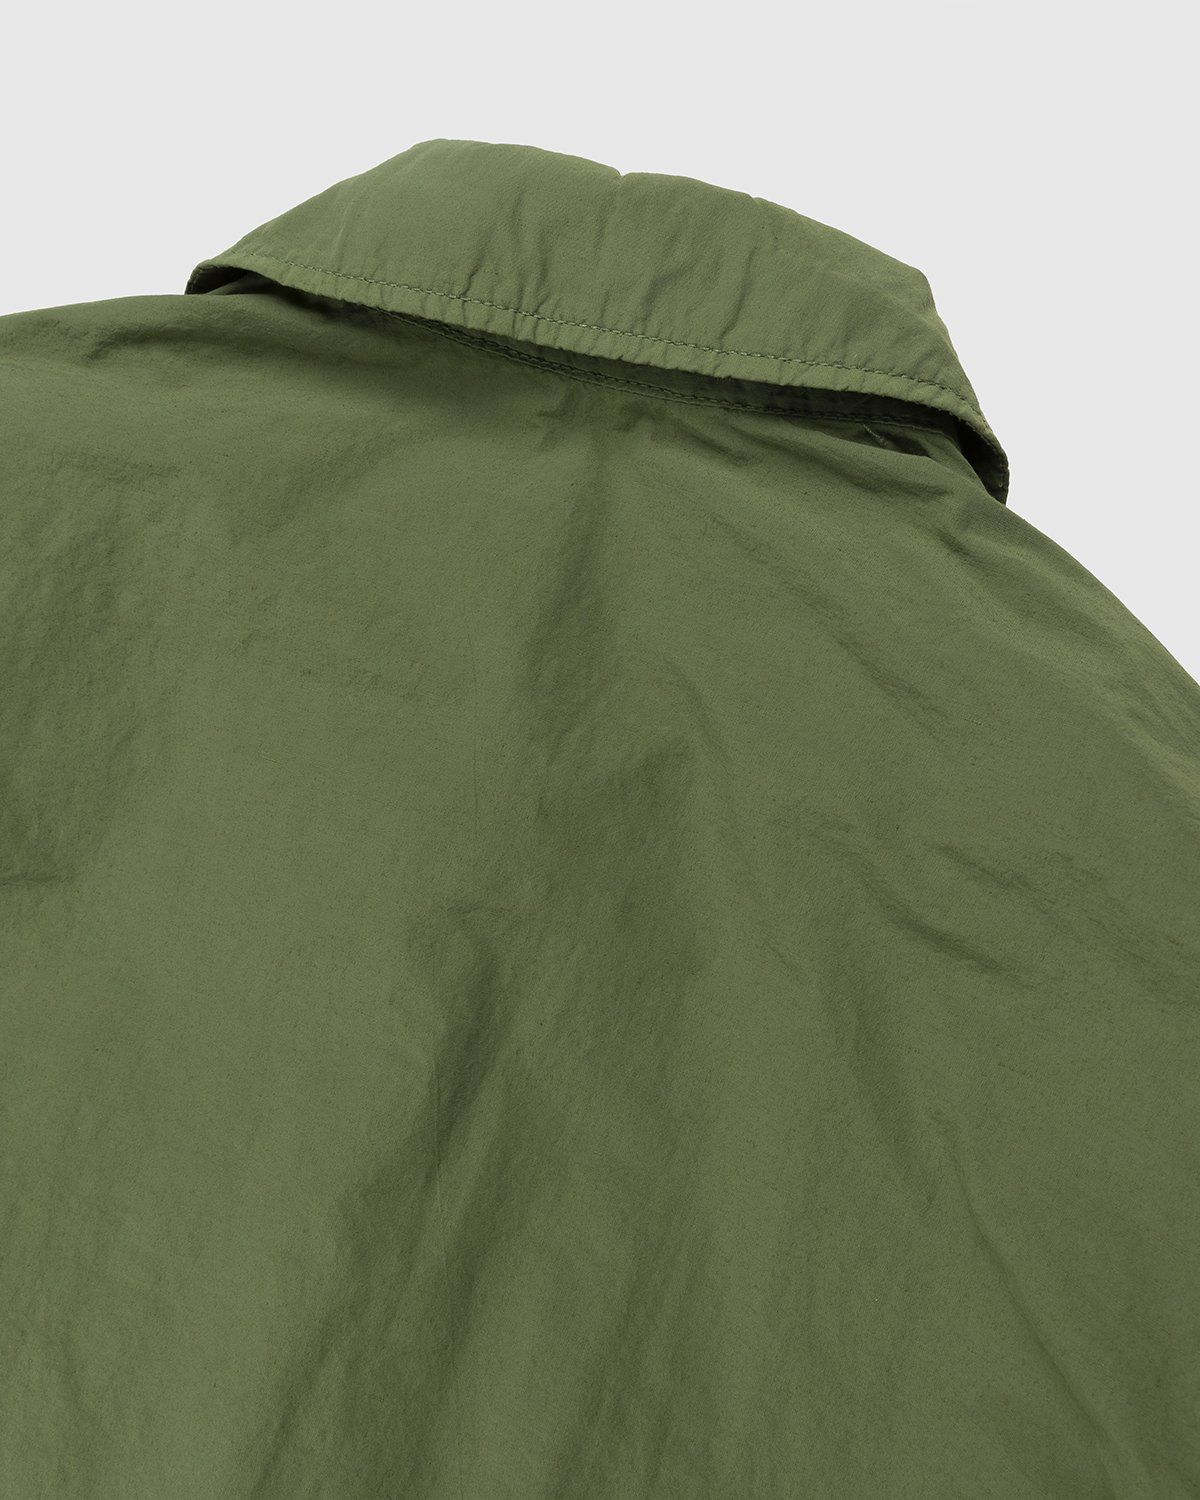 Stone Island – 10502 Garment-Dyed Naslan Light Overshirt Olive - Outerwear - Green - Image 4